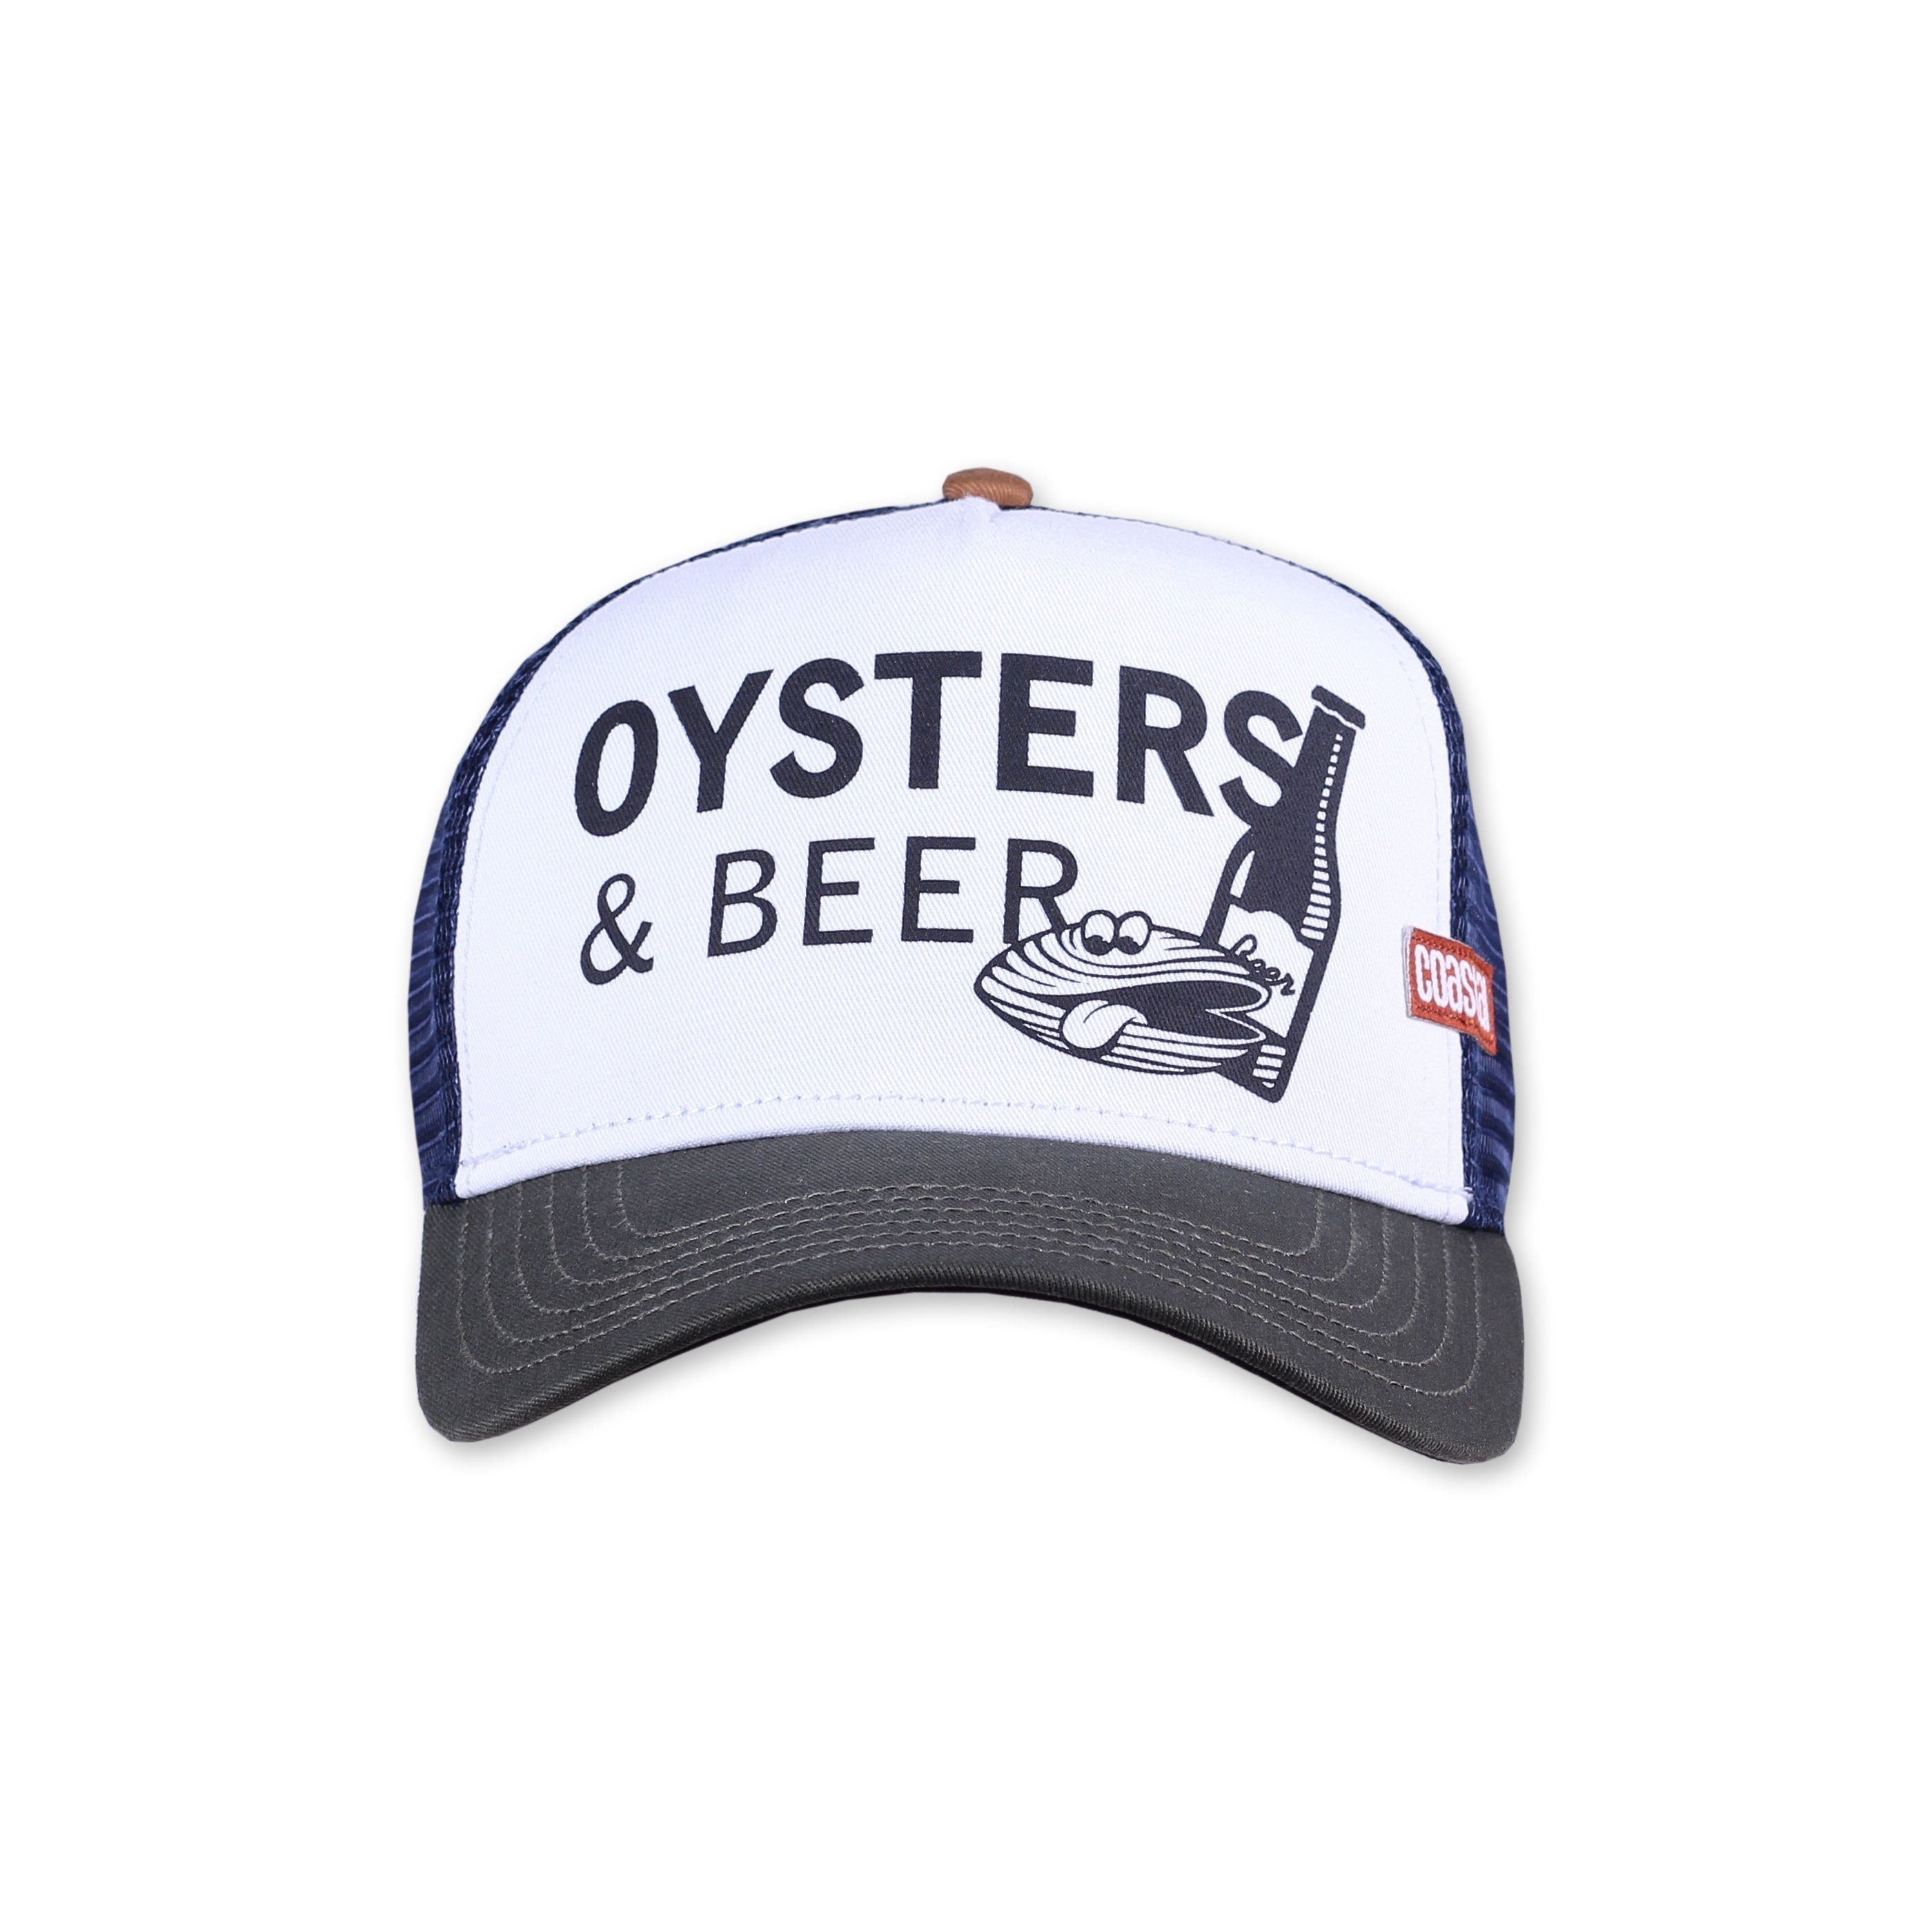 Oysters & Beer Cap Coastal Trucker